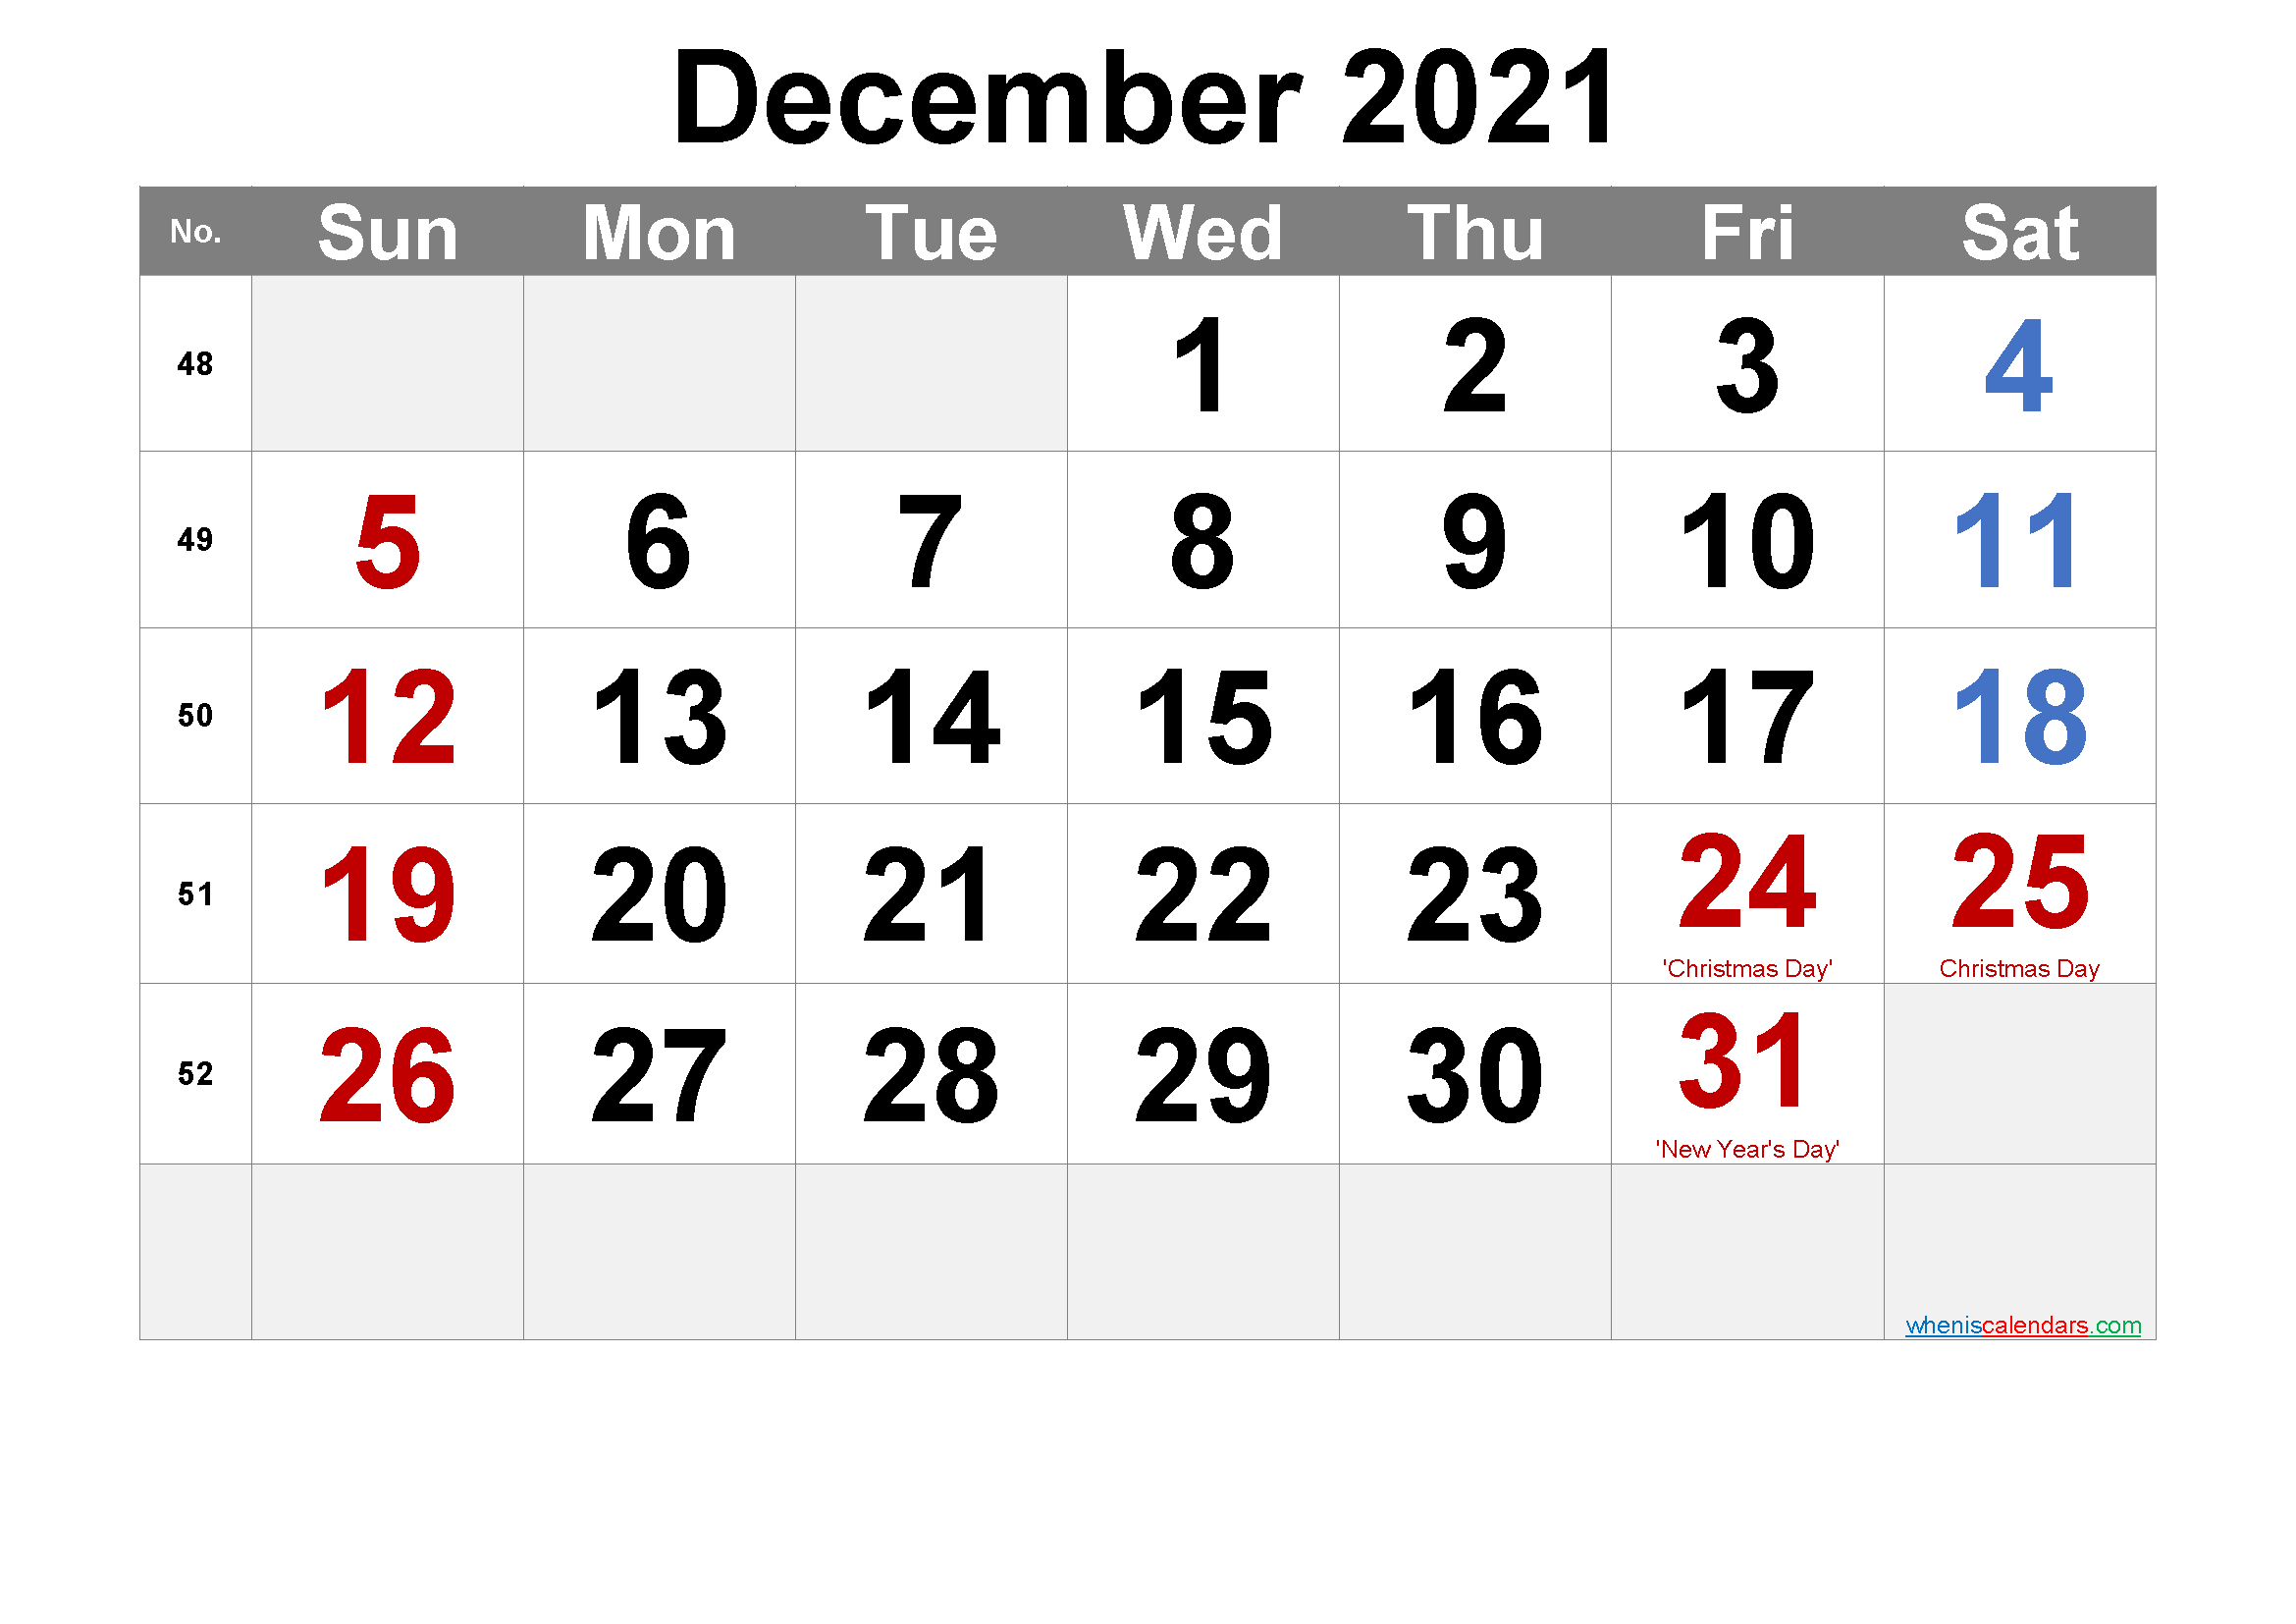 December 2021 Printable Calendar With Holidays - 6 Templates December 2021 Blank Calendar